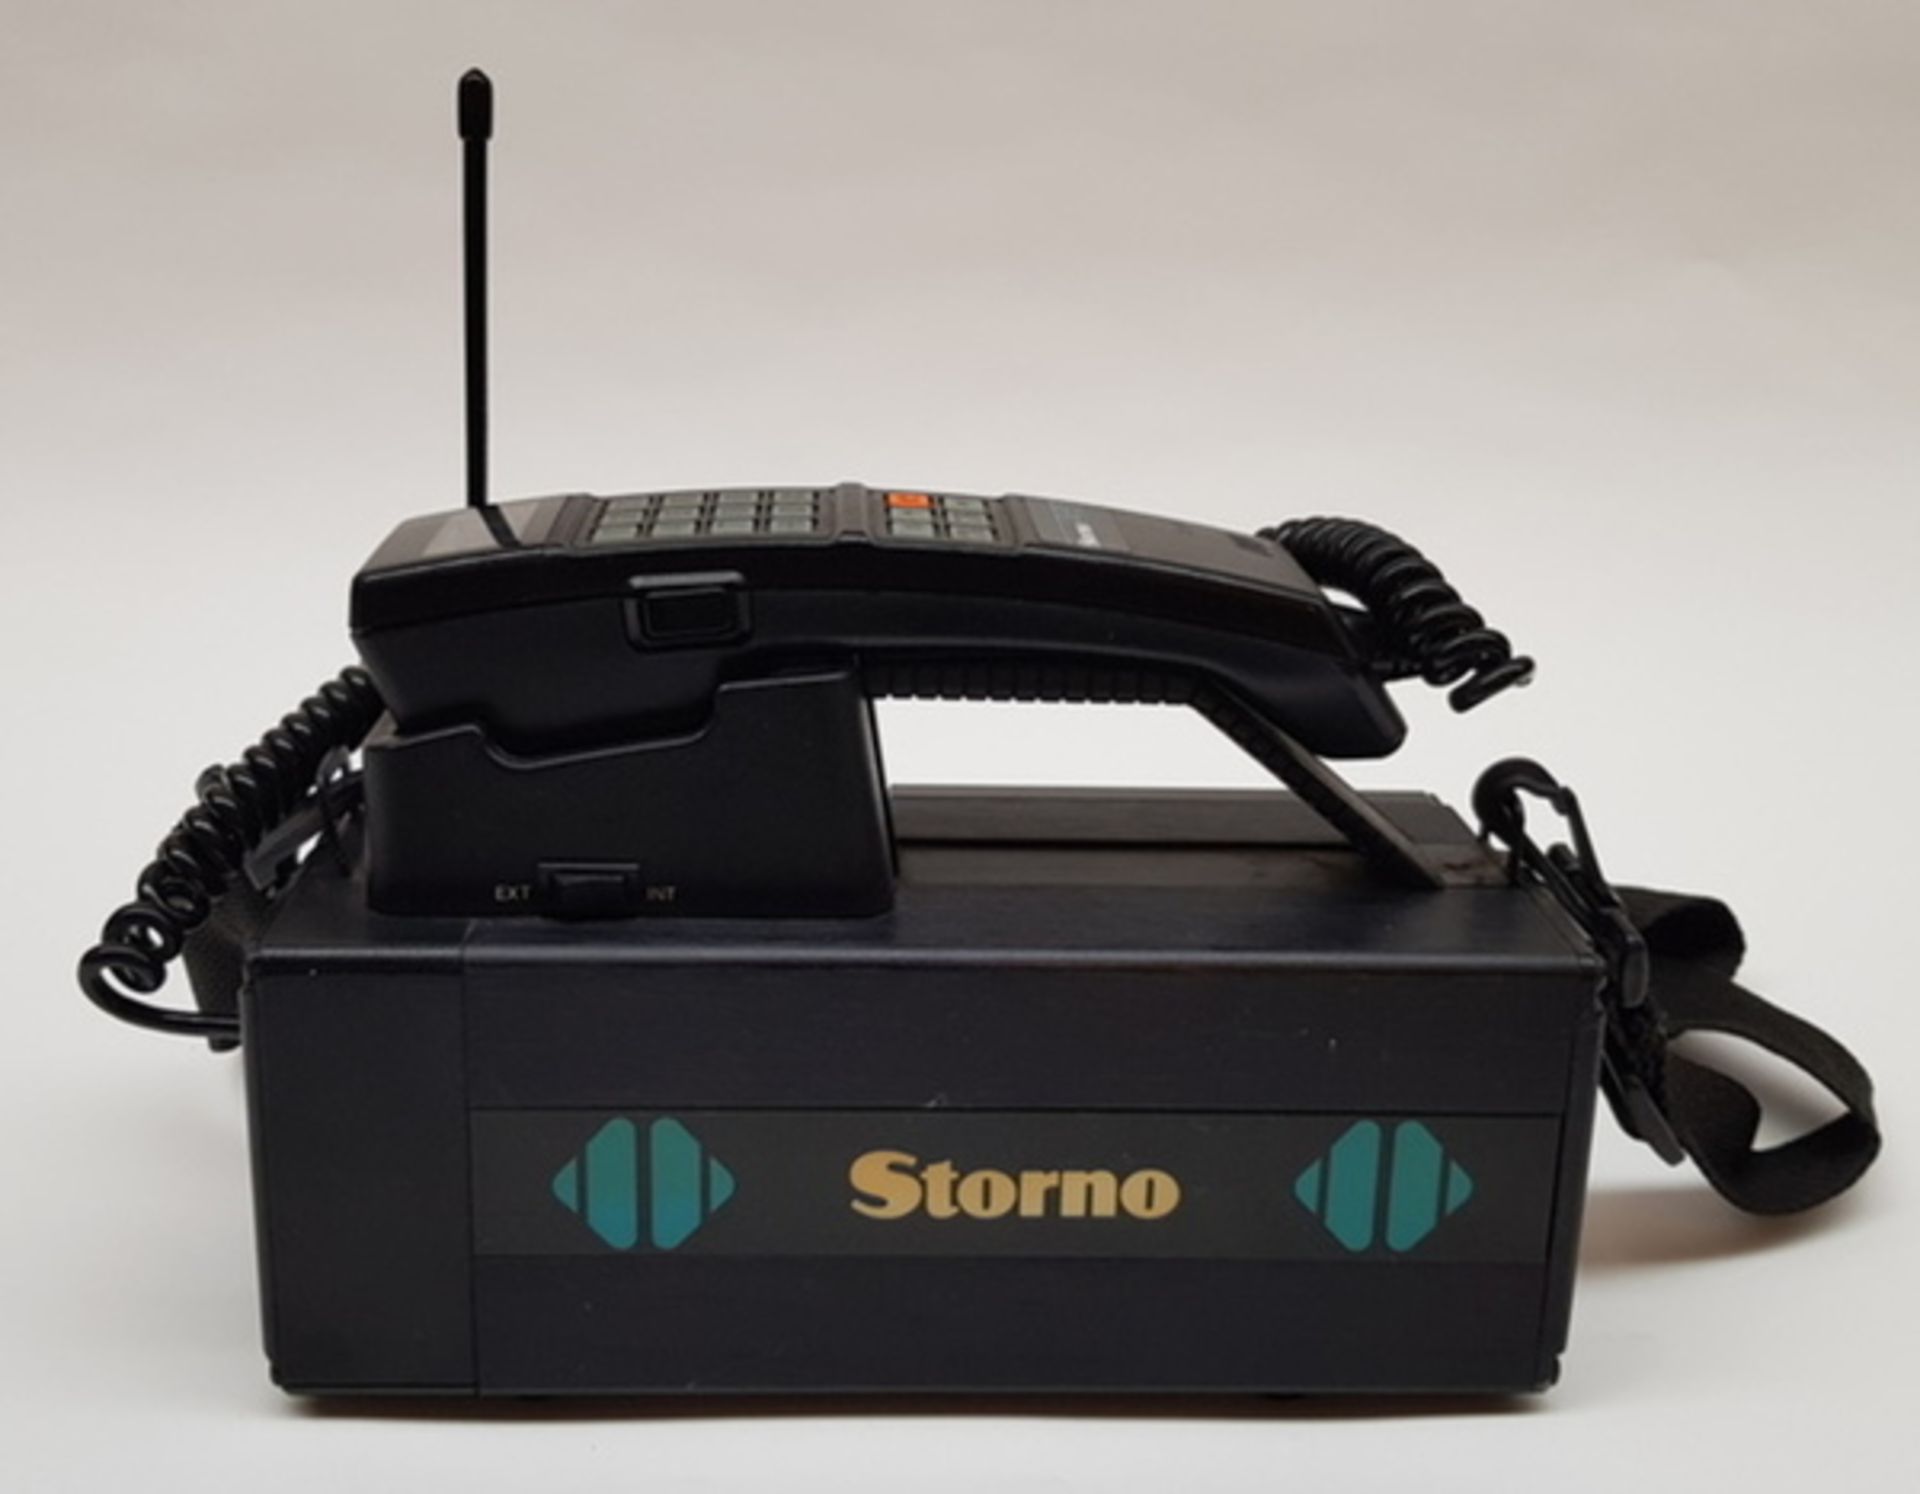 (Design) Telefoon, Motorola Storno 940, 1989Telefoon, Motorola Storno 940, 1989 Conditie: Goede